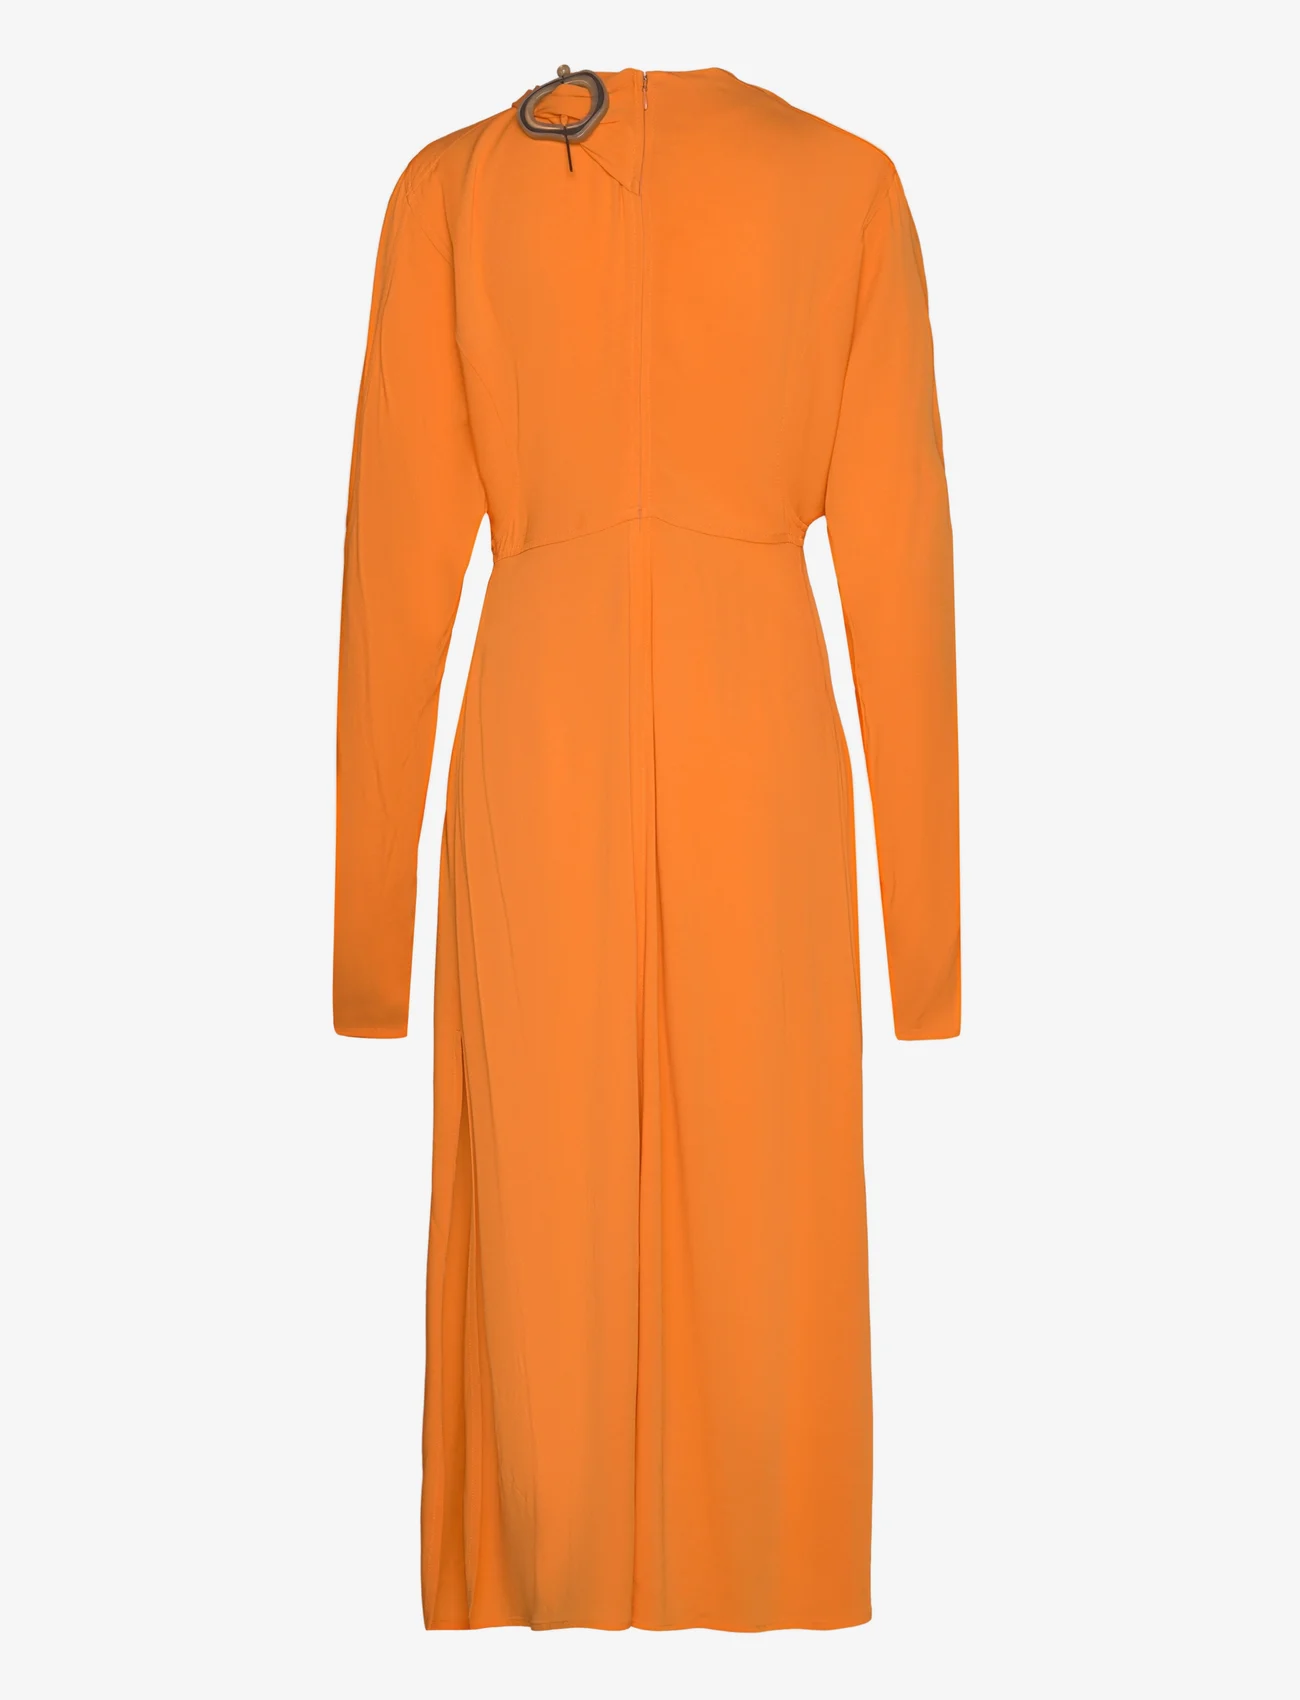 Wood Wood - Ambre crepe dress - feestelijke kleding voor outlet-prijzen - abricot orange - 1